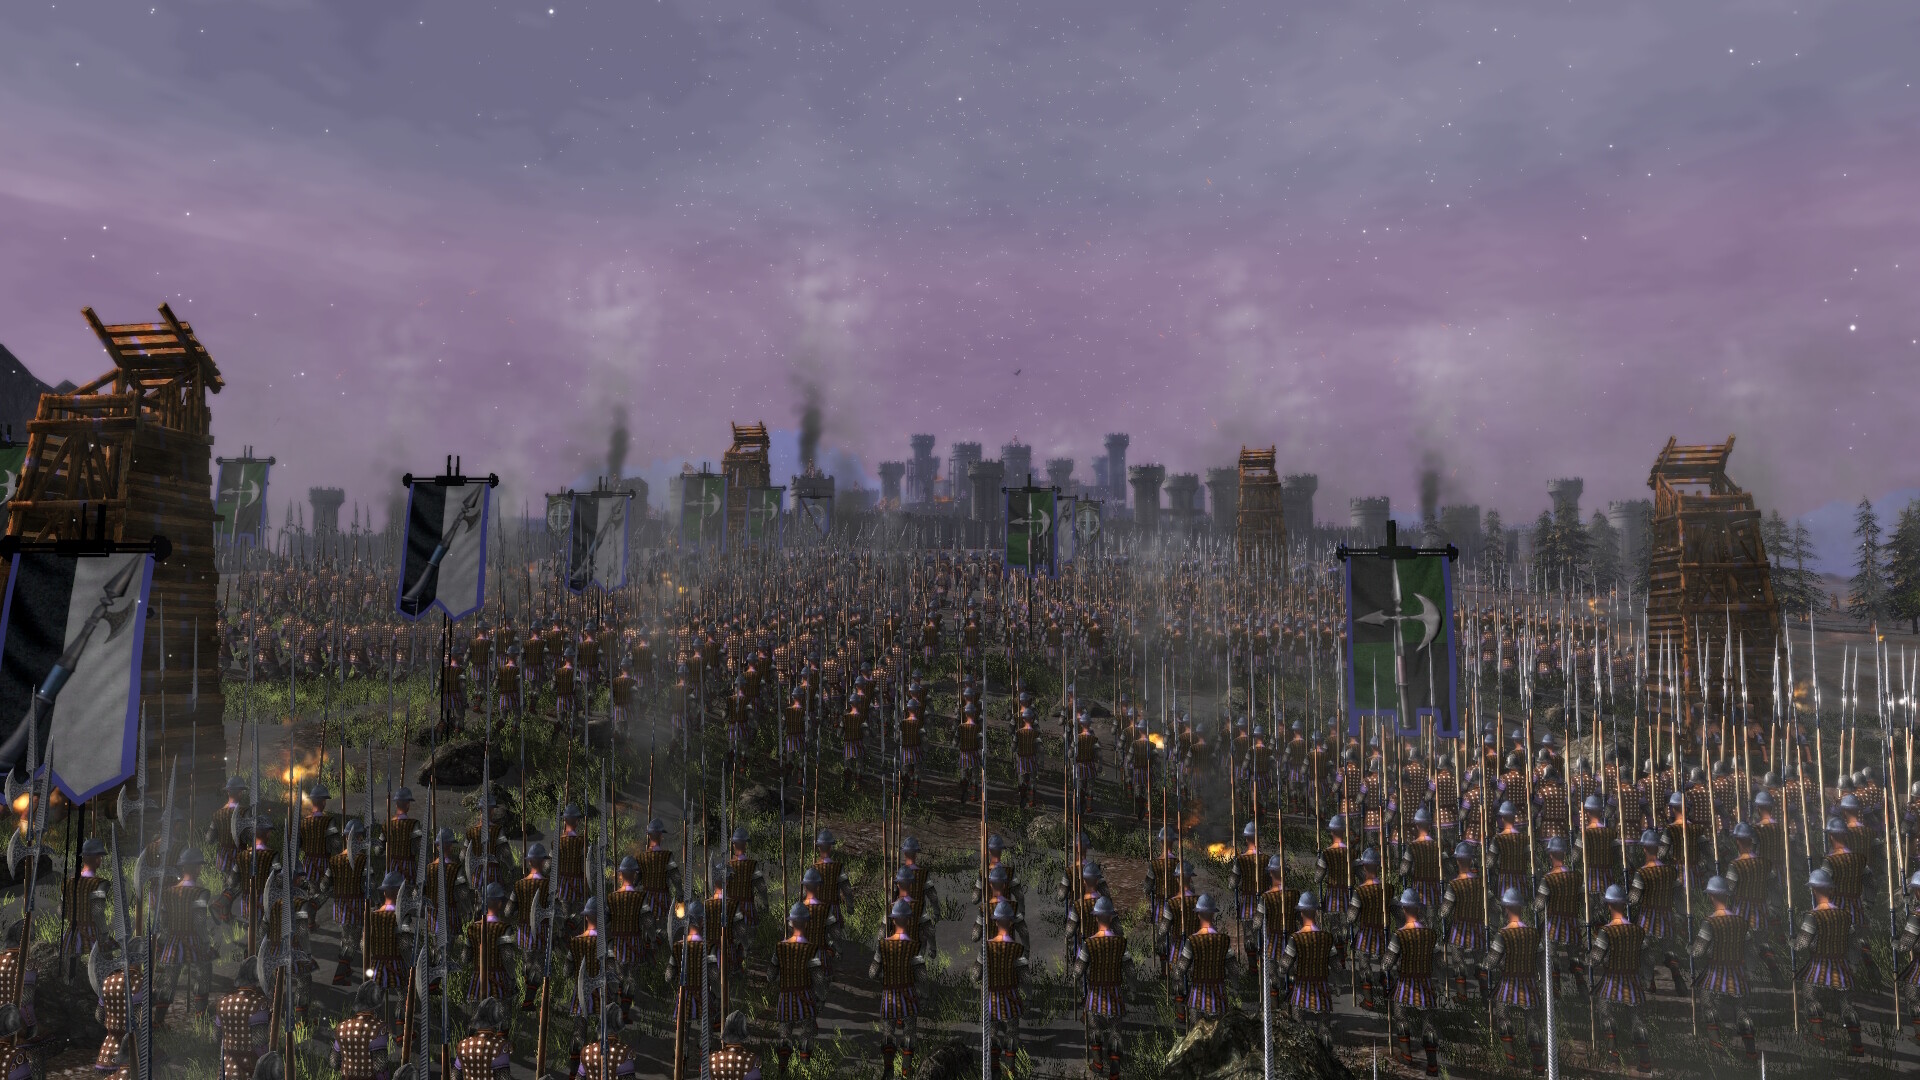 armies marching in Renaissance Kingdom Wars